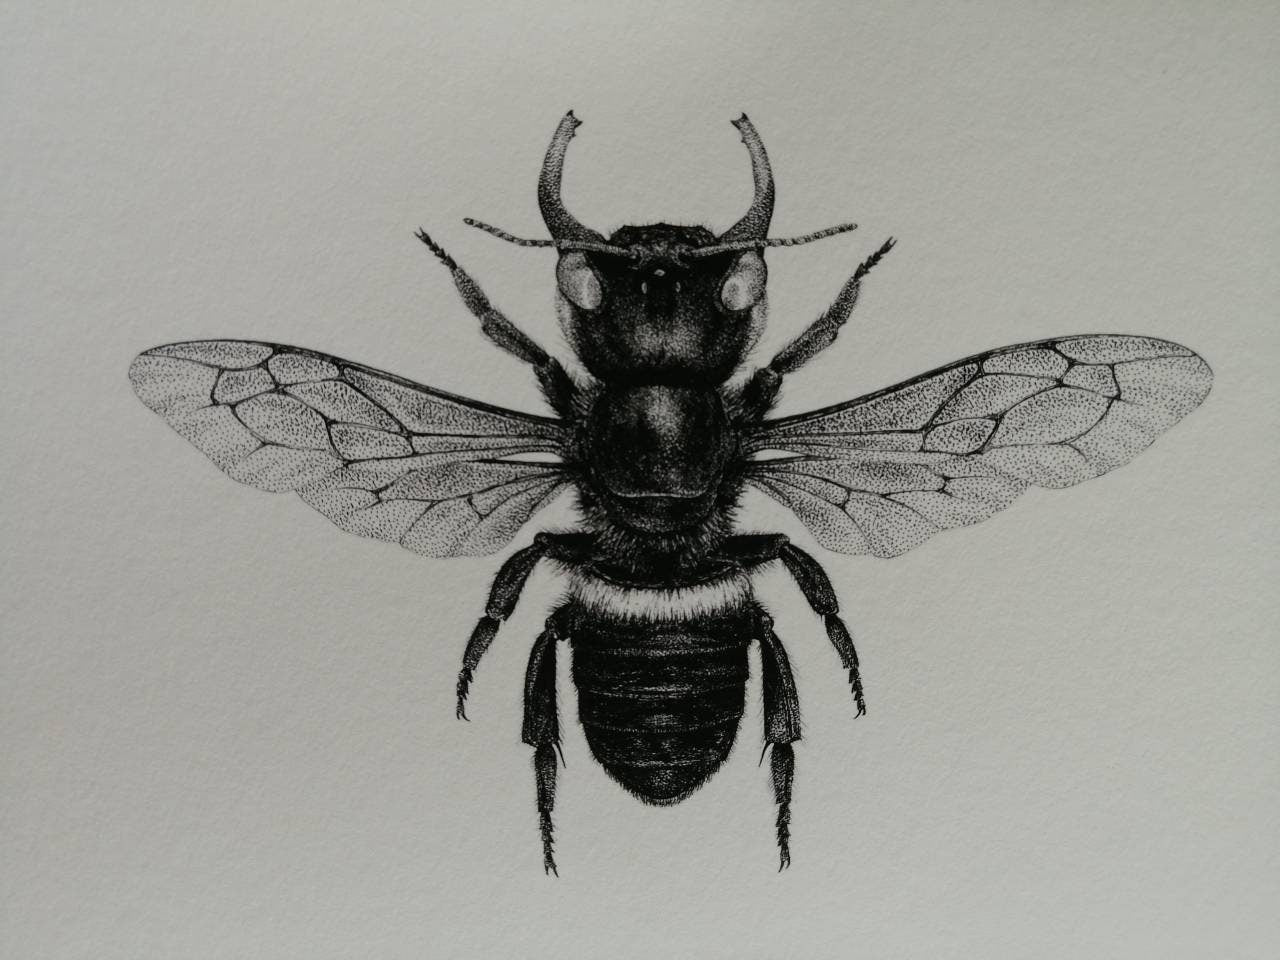 Megachile pluto archival quality art print A4 size